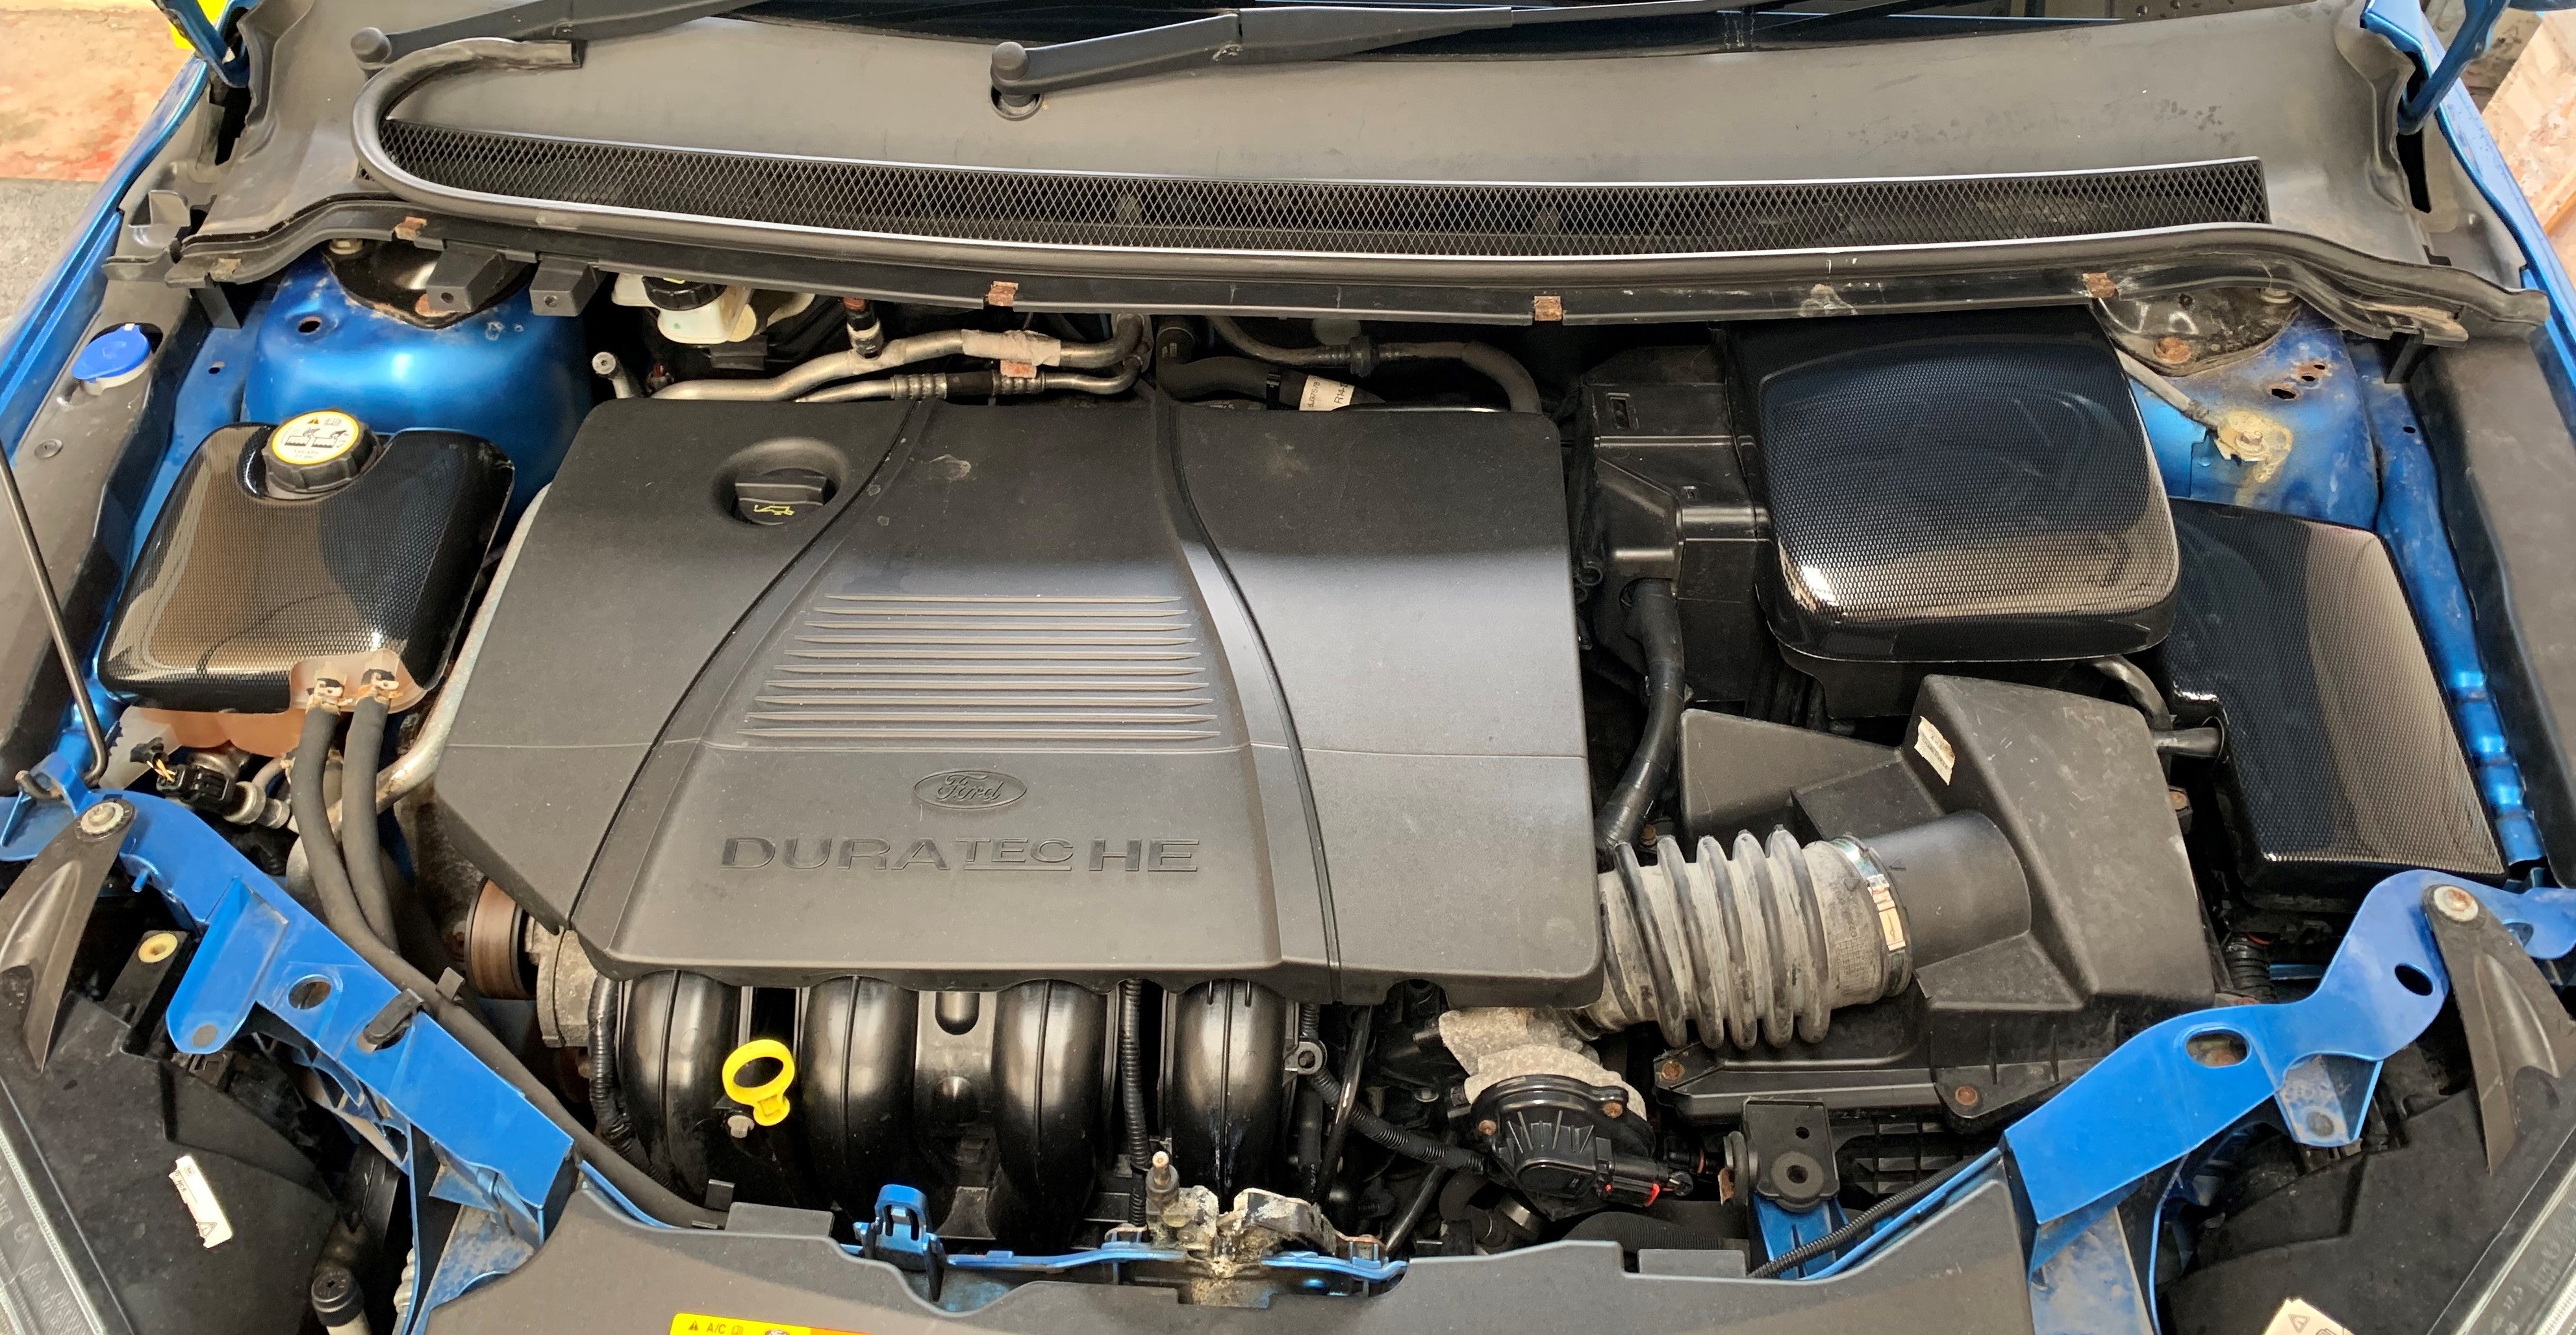 Proform Engine Bay Dress Up Kit - Volvo C30 / V50 Petrol (Plastic Finishes)